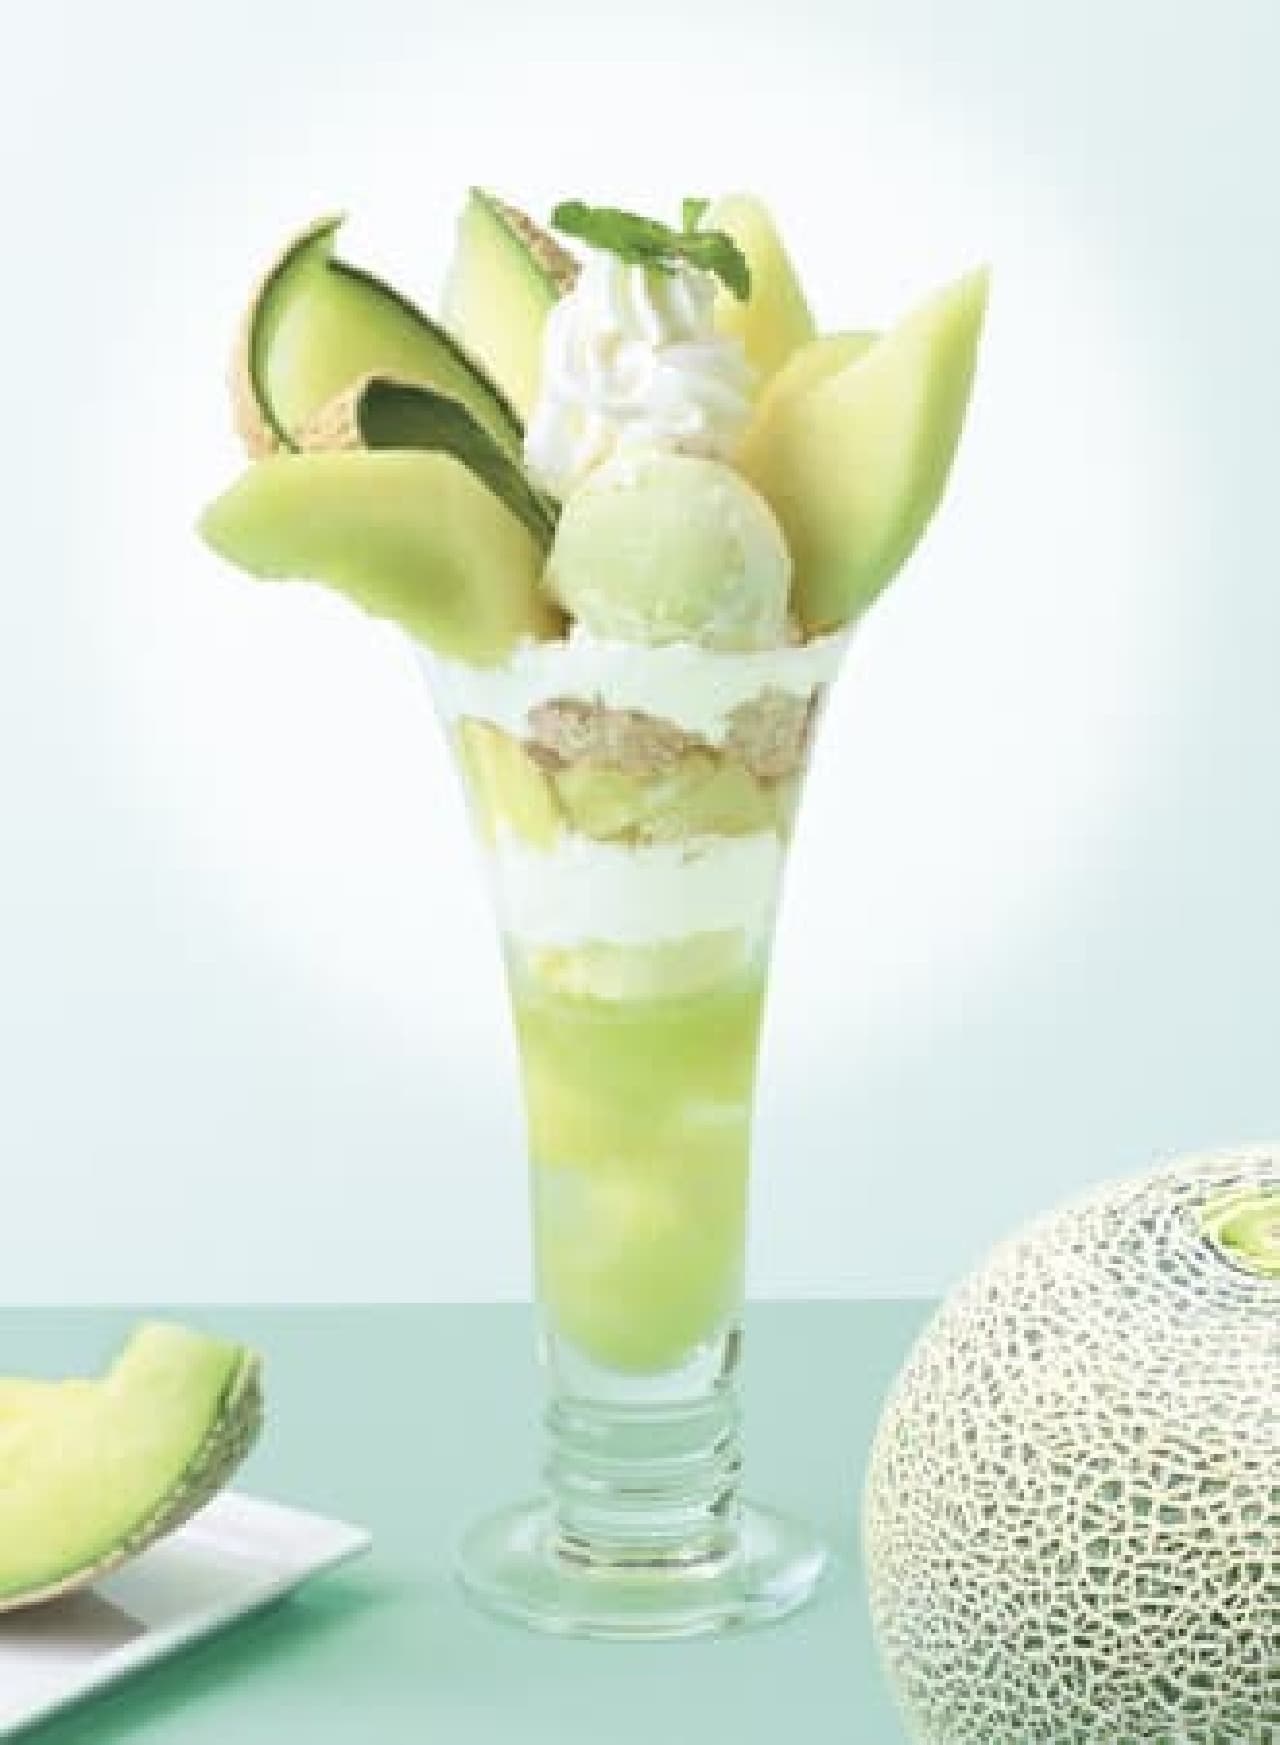 Ginza KOJI CORNER "Ibaraki Melon Parfait" - The Taste of the Season! With homemade melon granite & vanilla ice cream